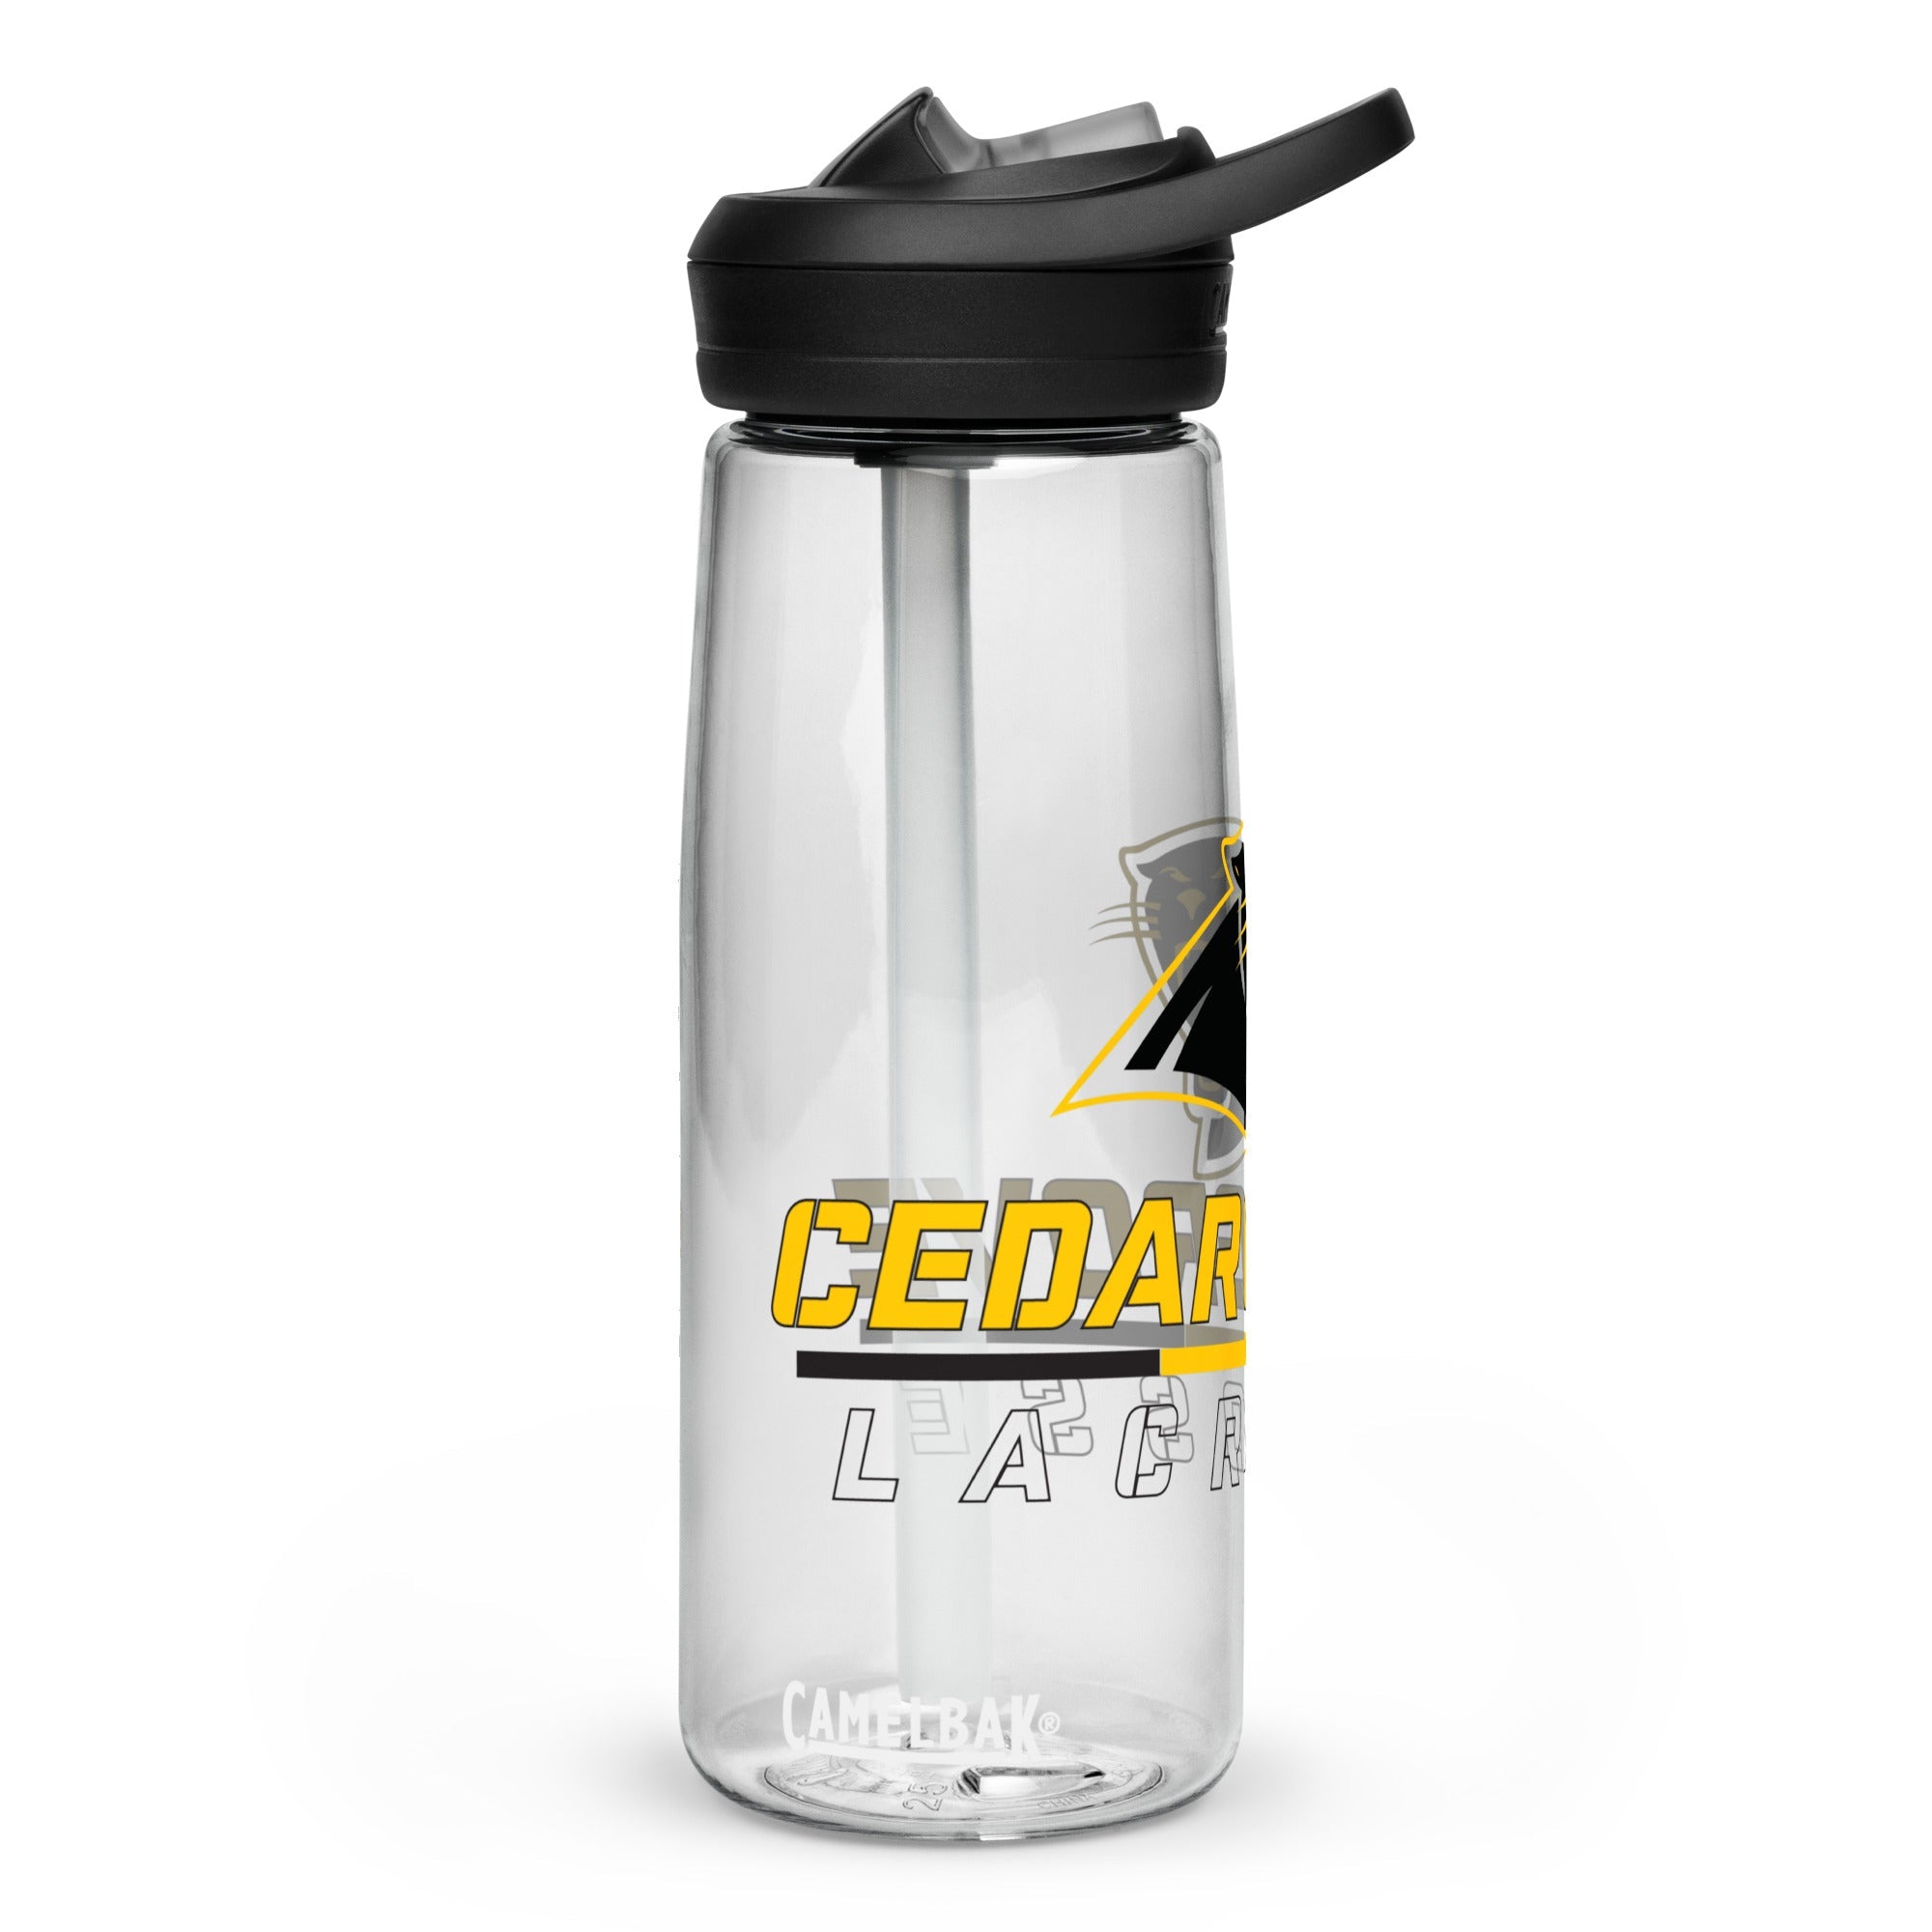 CGHS Sports water bottle